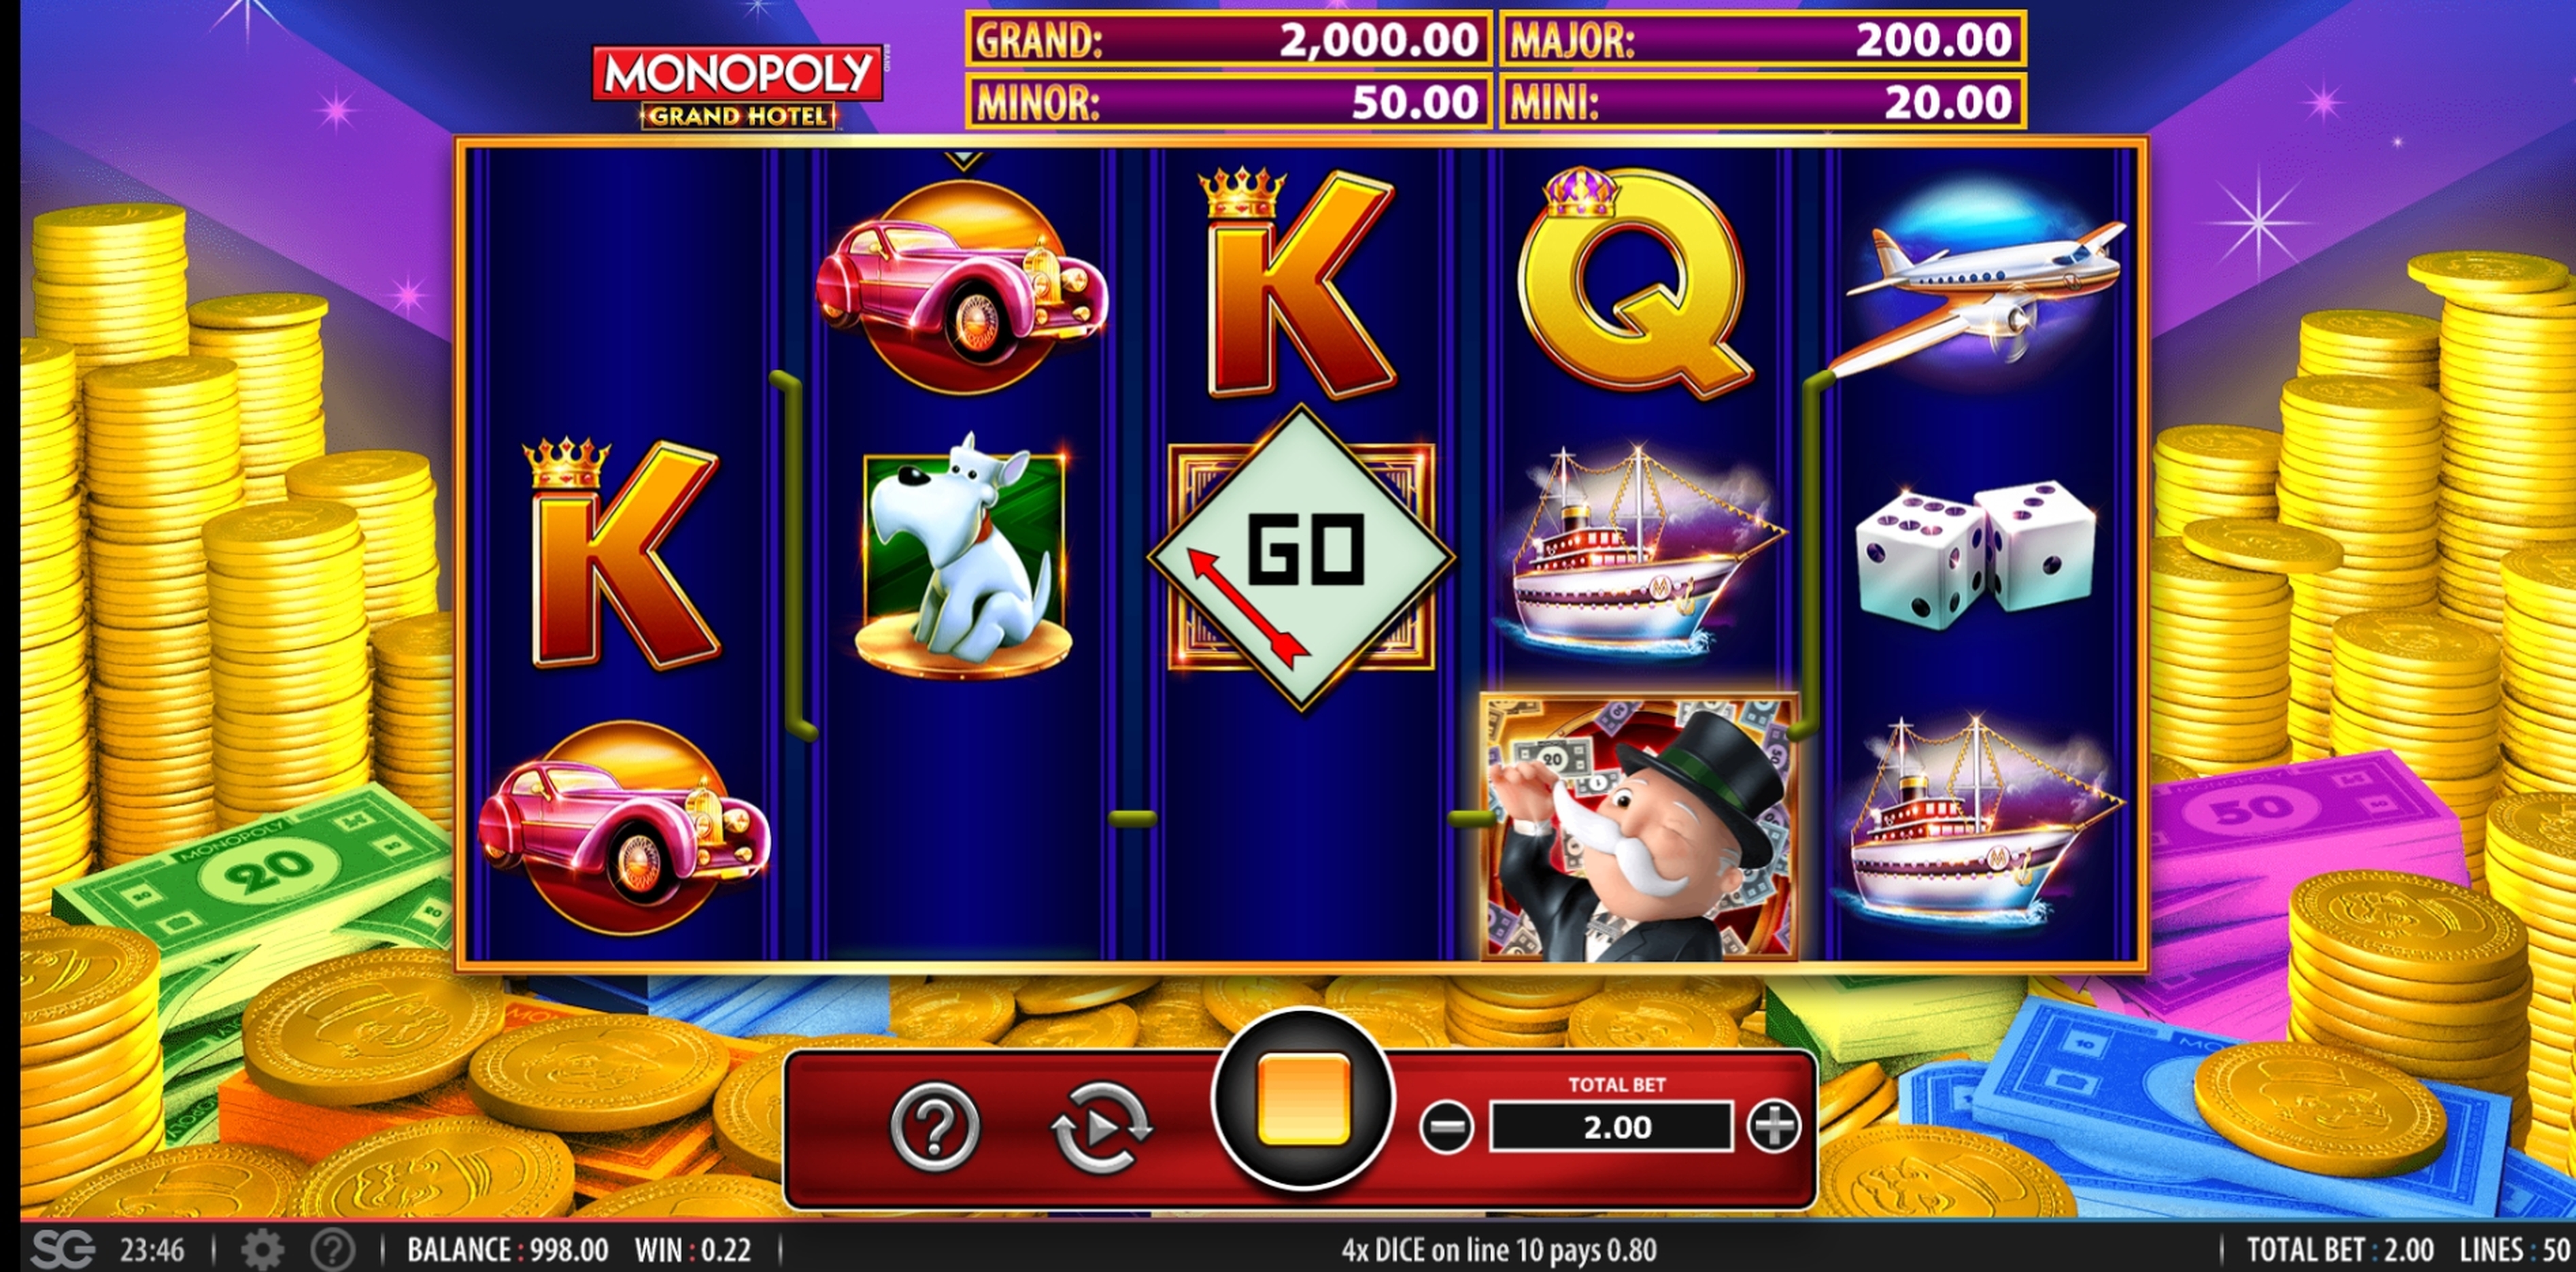 Monopoly Super Grand Hotel Slot Machine